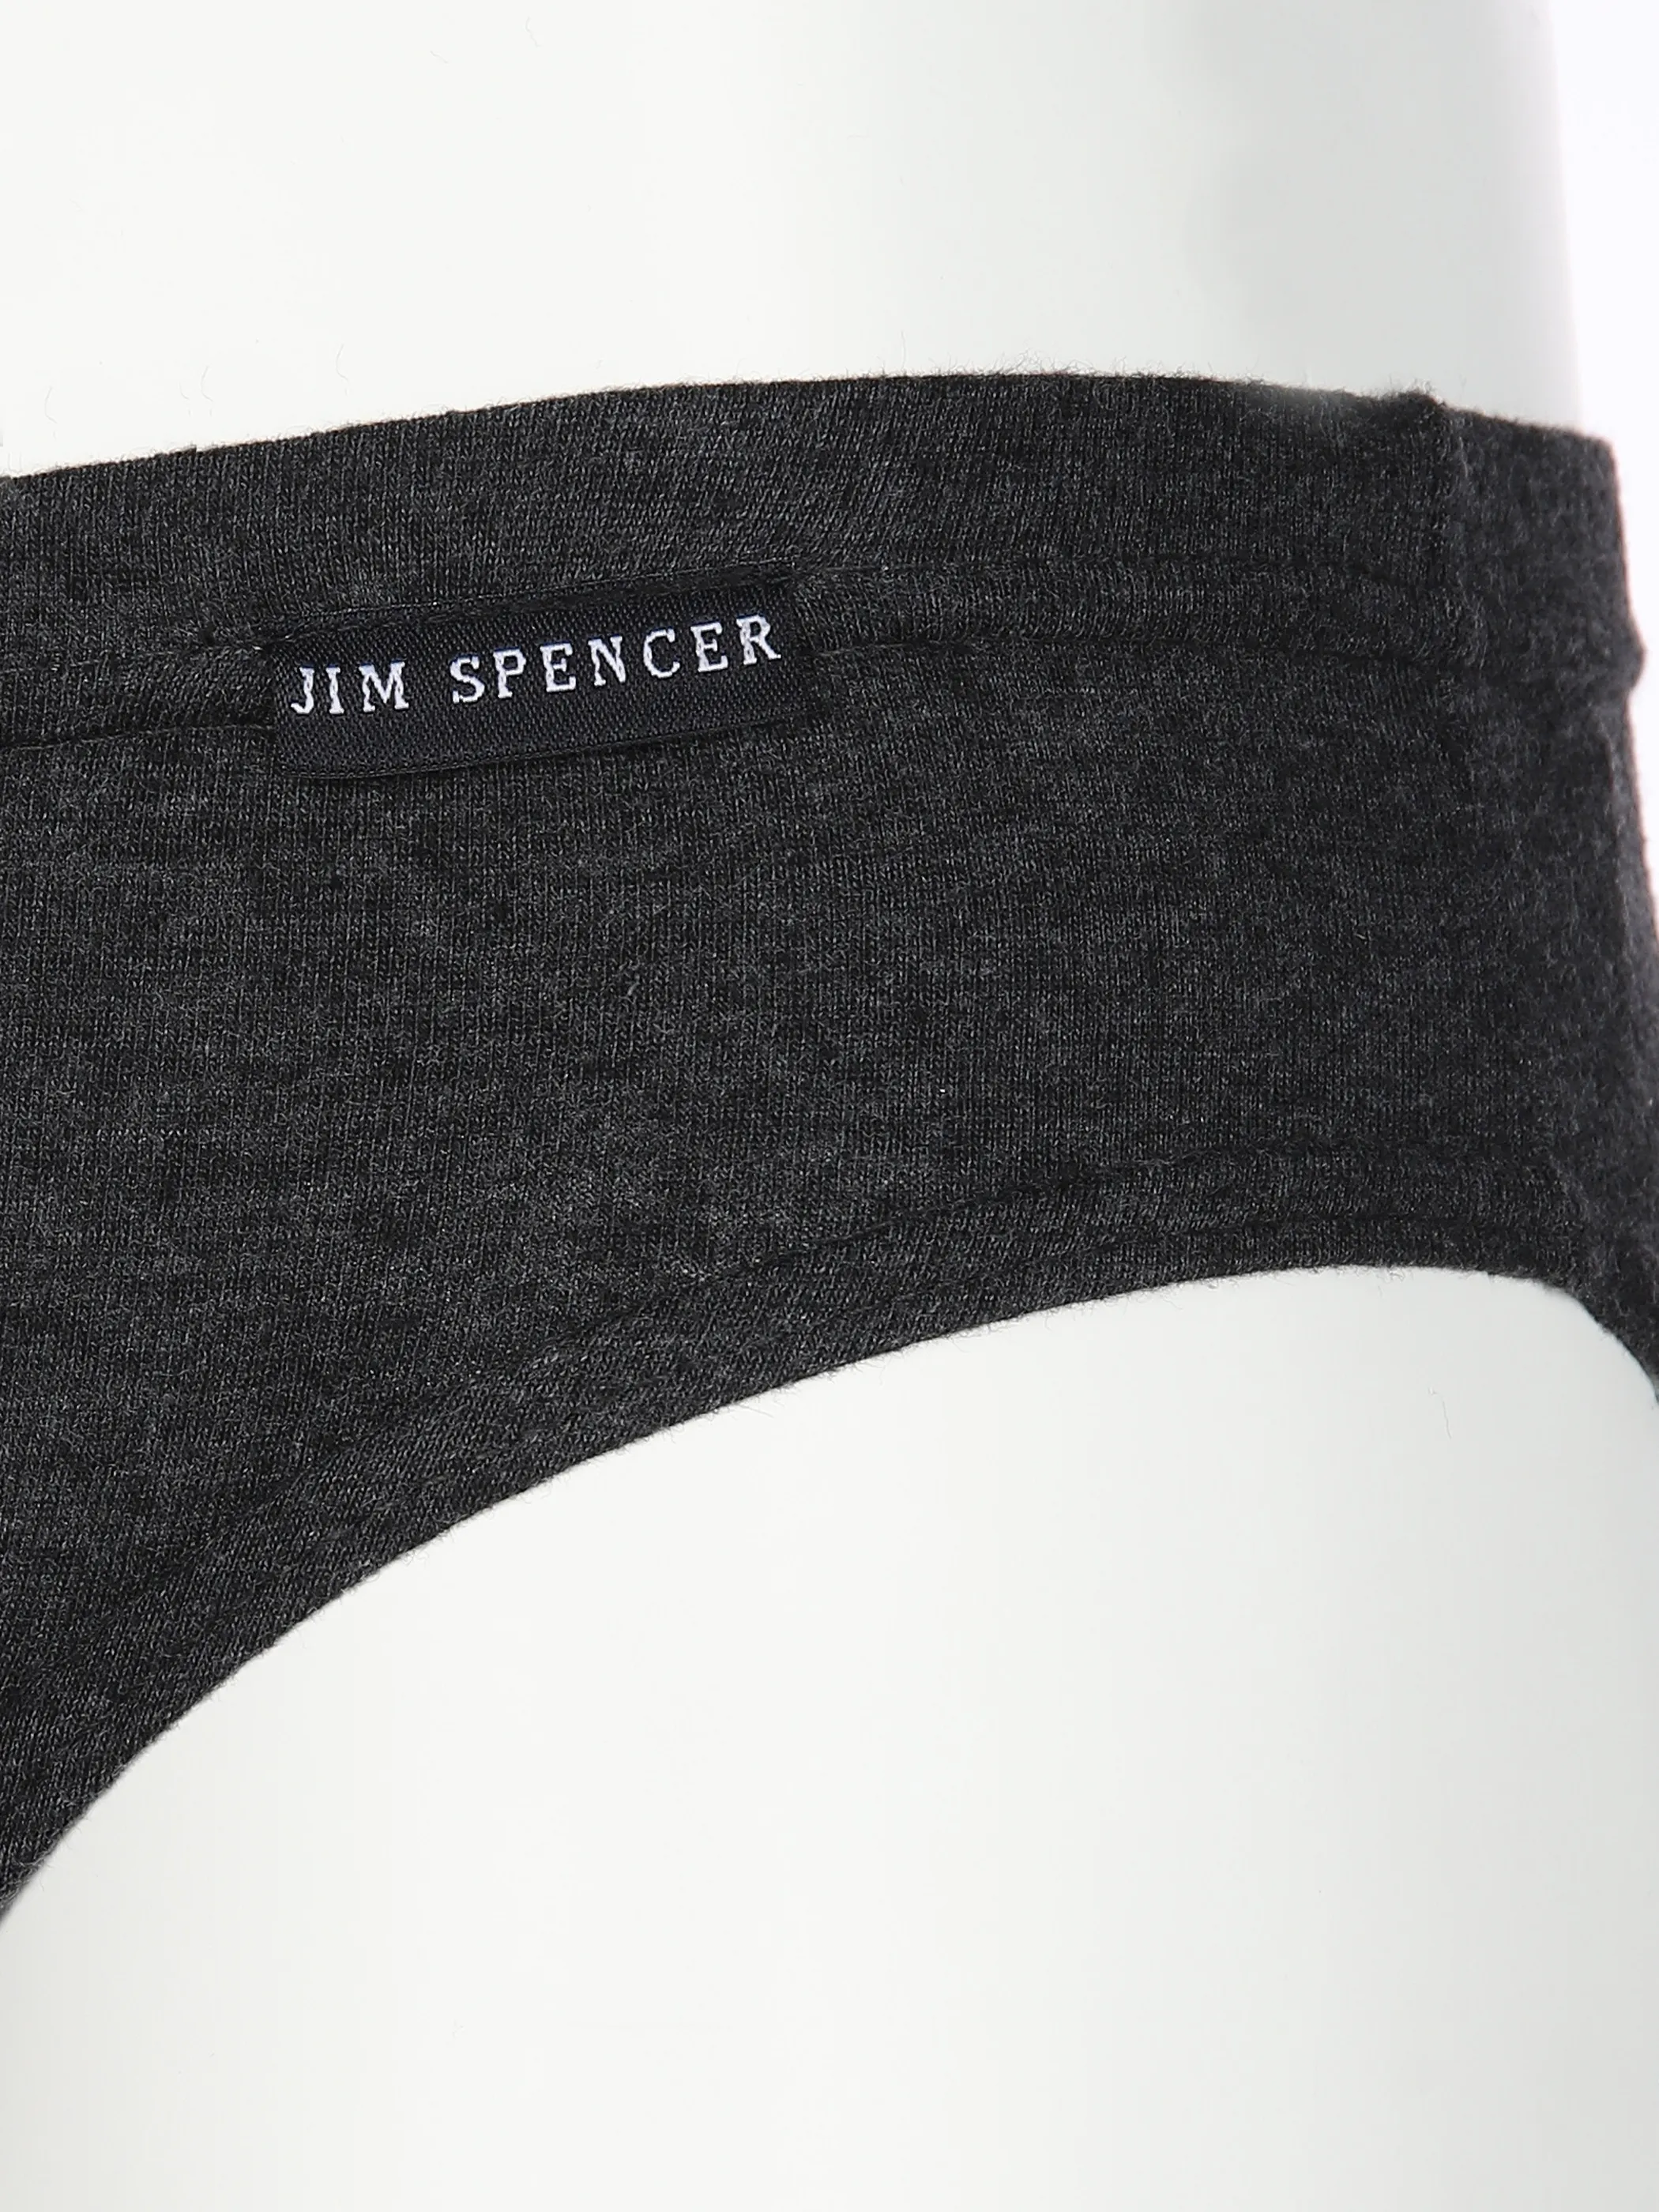 Jim Spencer He-Slip 5er Pack Grau 591100 GRAU 3